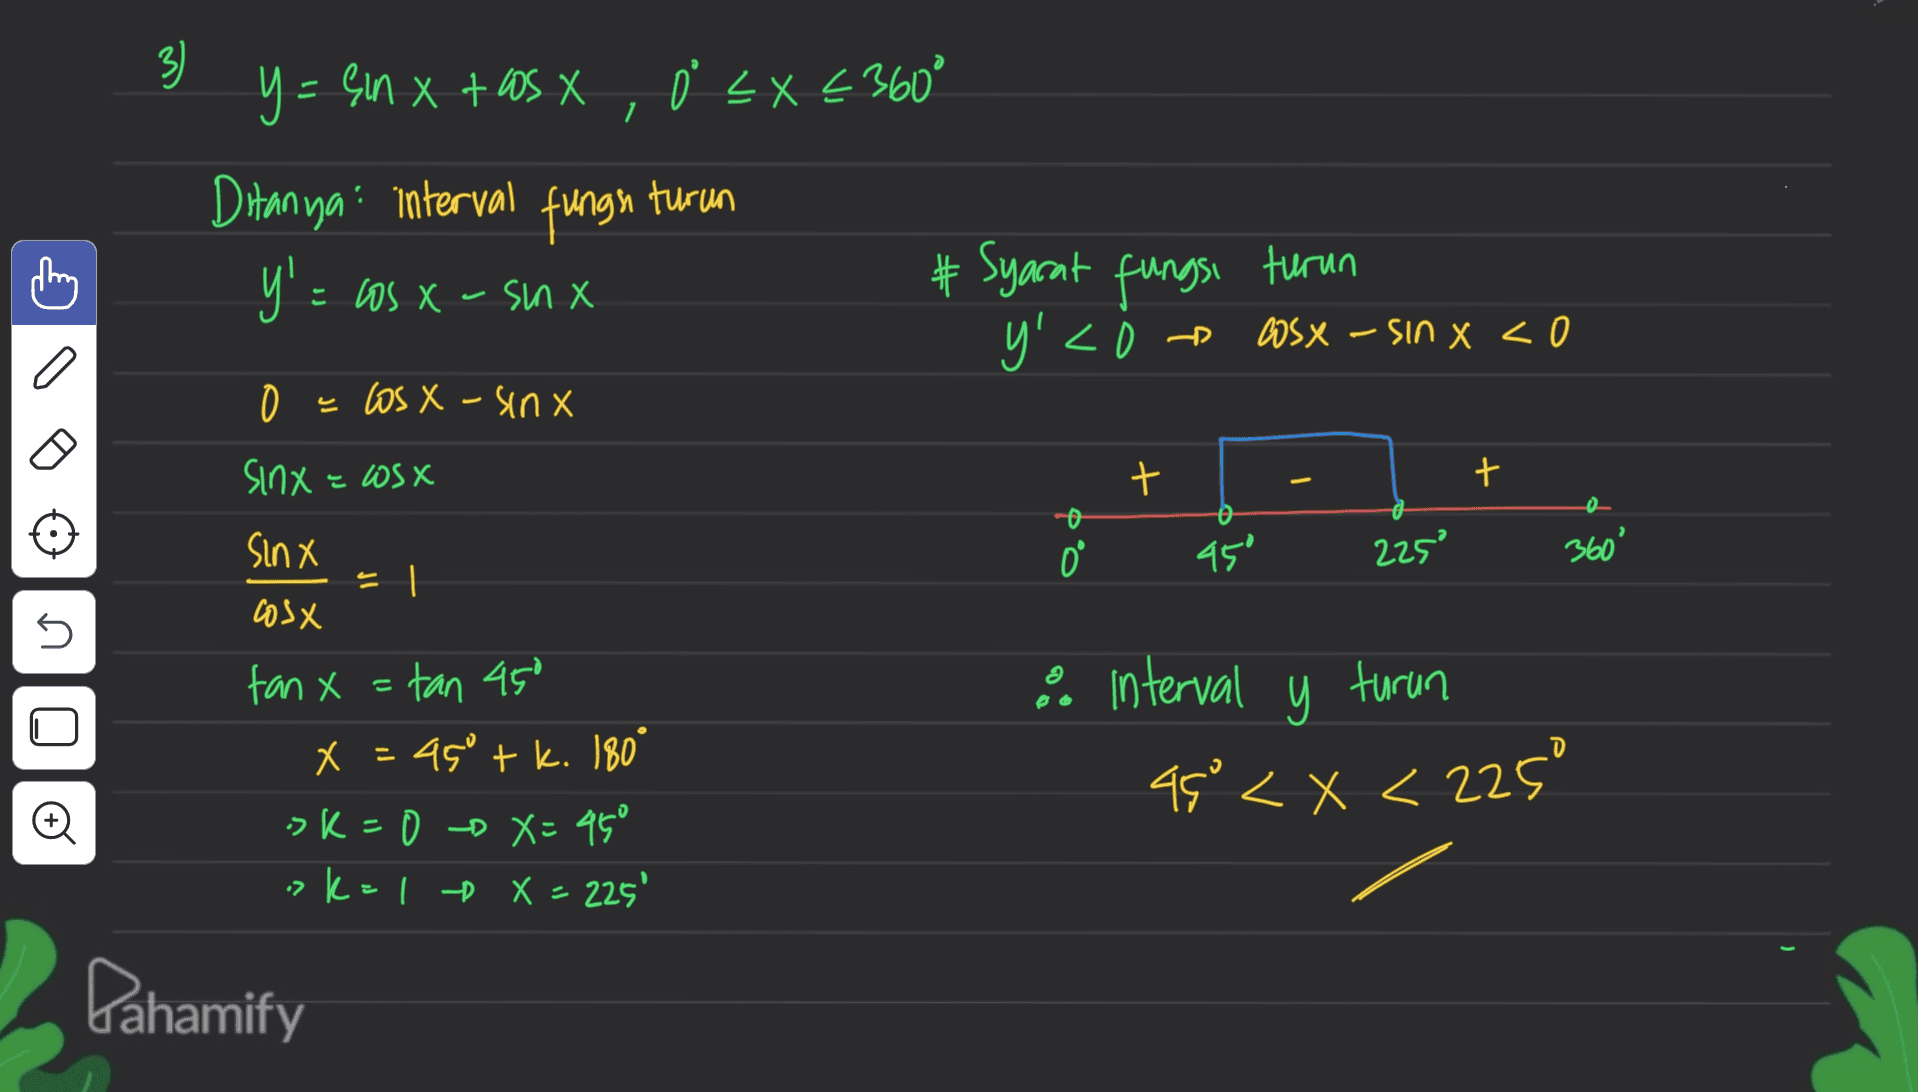 3) 1943 x 5,0 ' x set x ung =h issunt turun Ditanya: interval y': = COS X - sinx Los X- # Syarat fungsi turun y'< 0 > XUIS – XSCO o a los X - sinx Sinx = Wsx + t 0 45° 225 360° 5 & Sinx cosx fan x=tan 450 X x = 45° + k. 180° ok=0 X= 45° > k=1 X = 225' X & interval y turun 45° <x<225° O = • Pahamify 